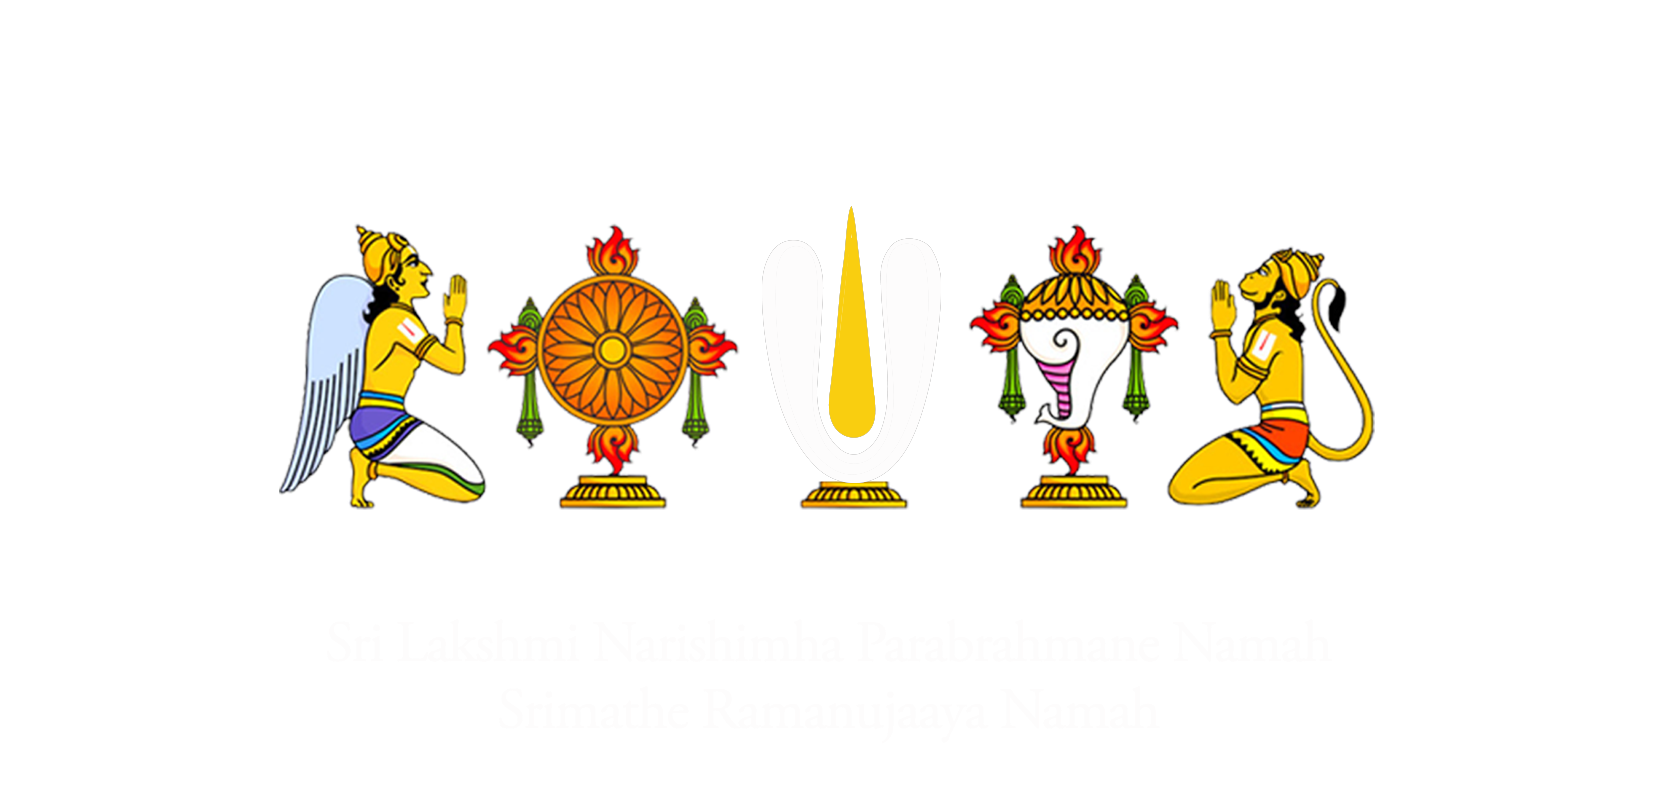 Venkateswara Symbolic Representation